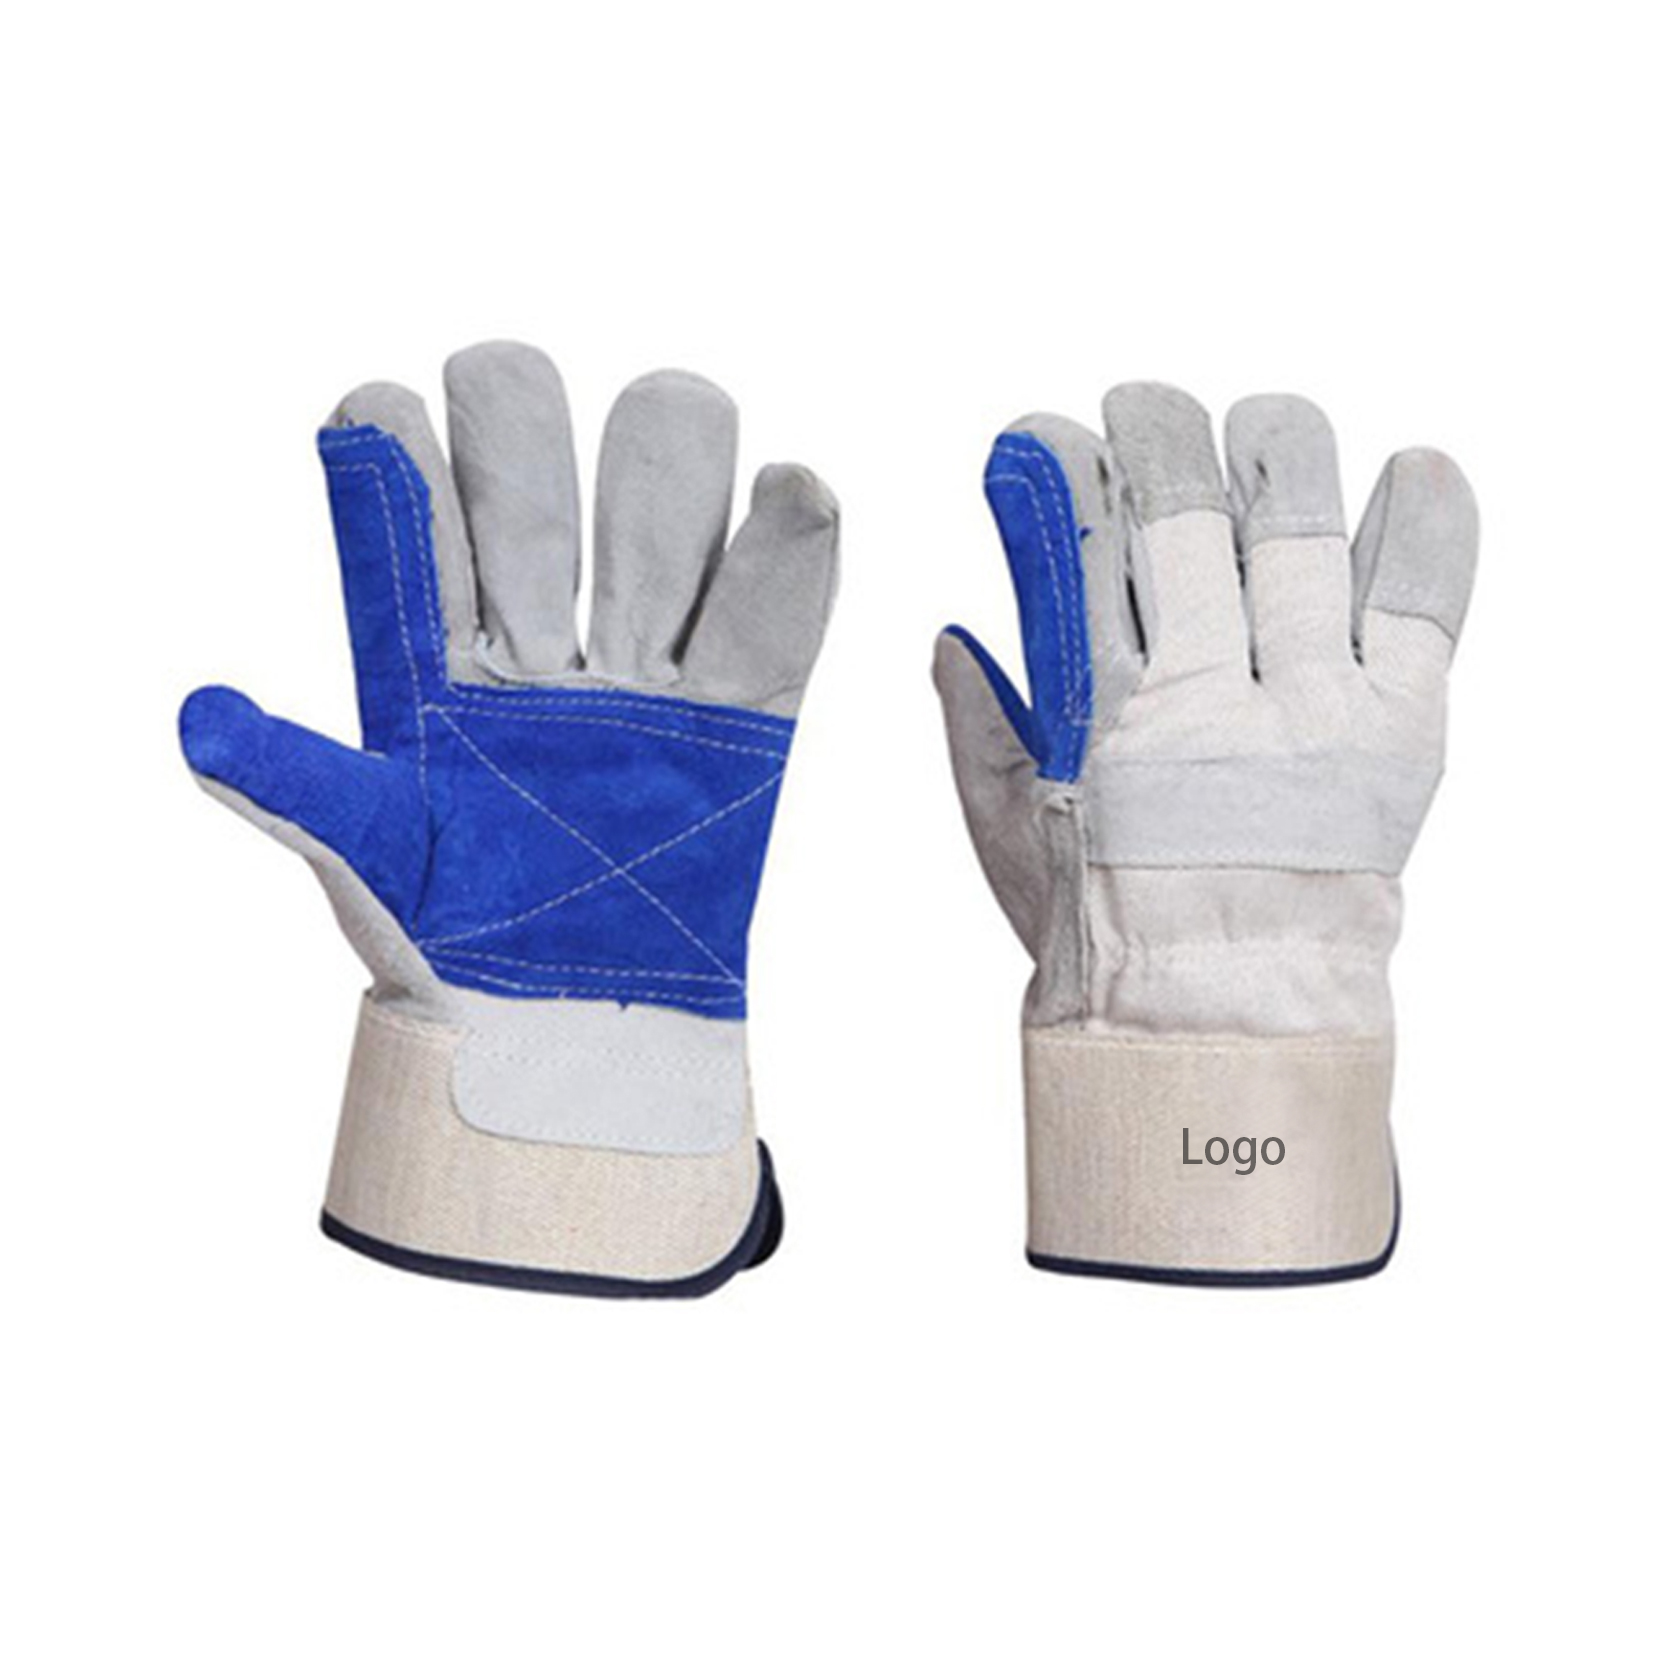 Safety Leather Work Gloves Men, Gardening Gloves, Rigger Gloves, conditor Gloves